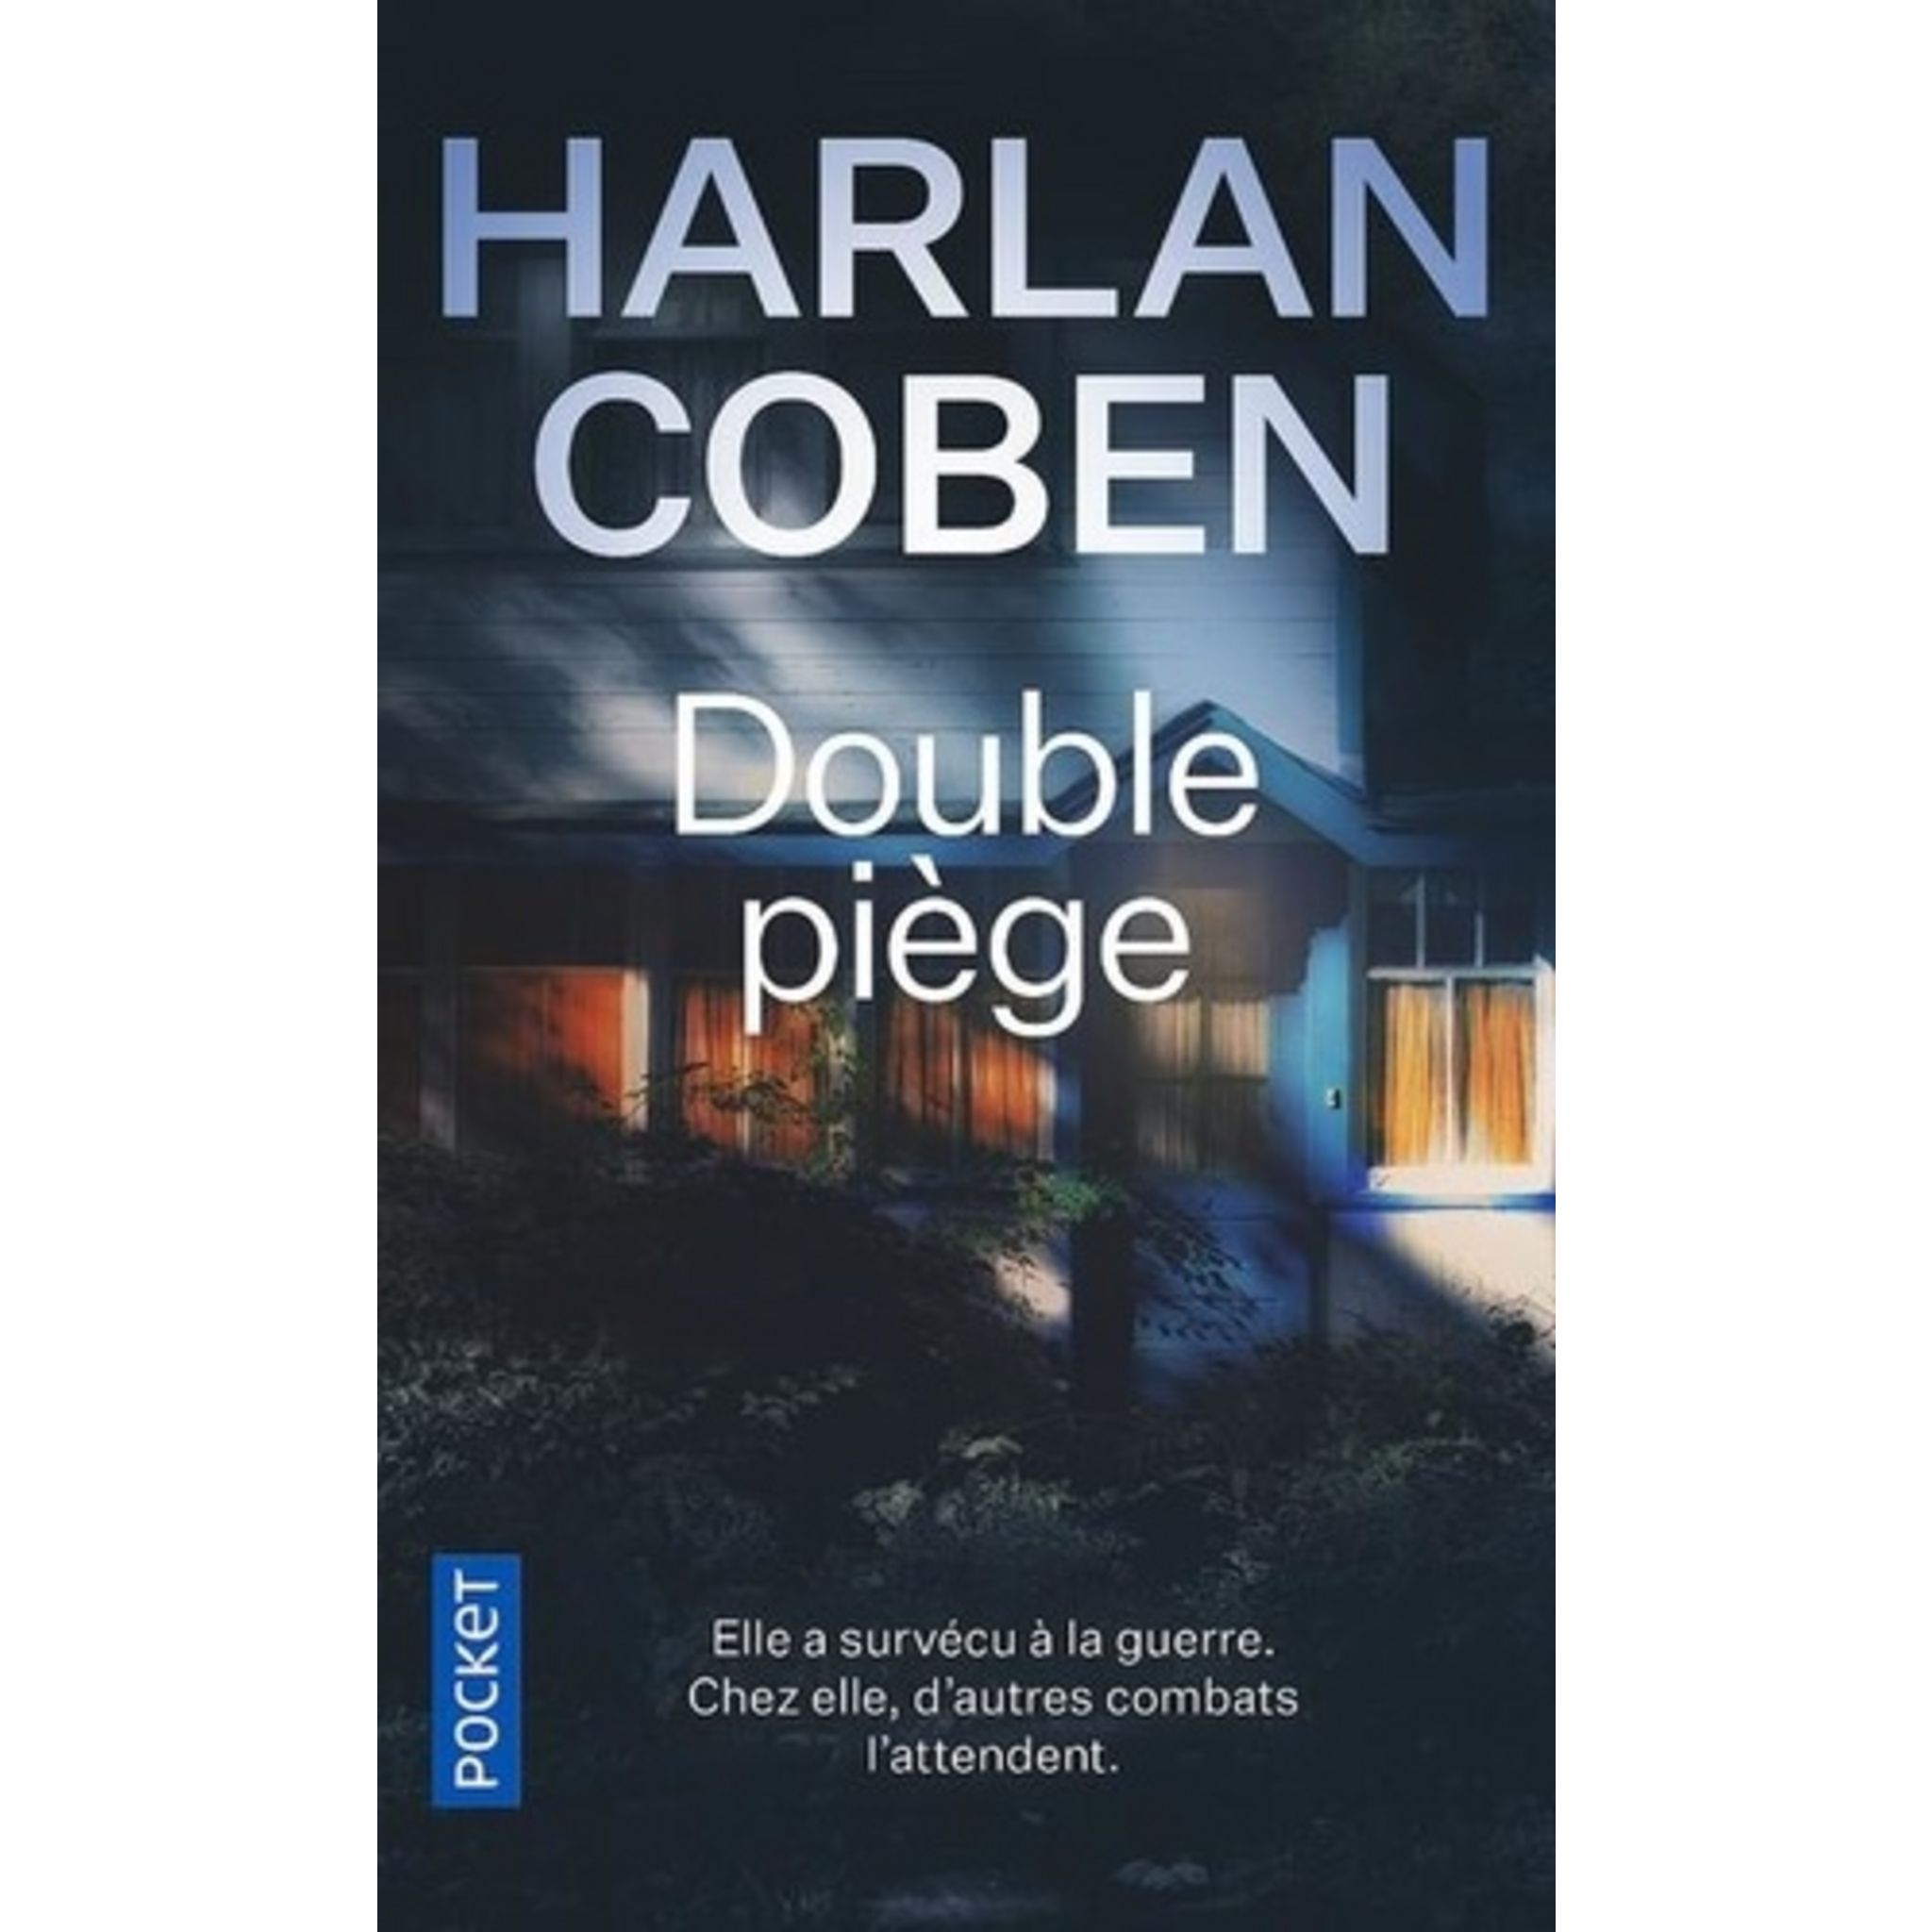 Double piège (Harlan Coben) - Analyse du livre